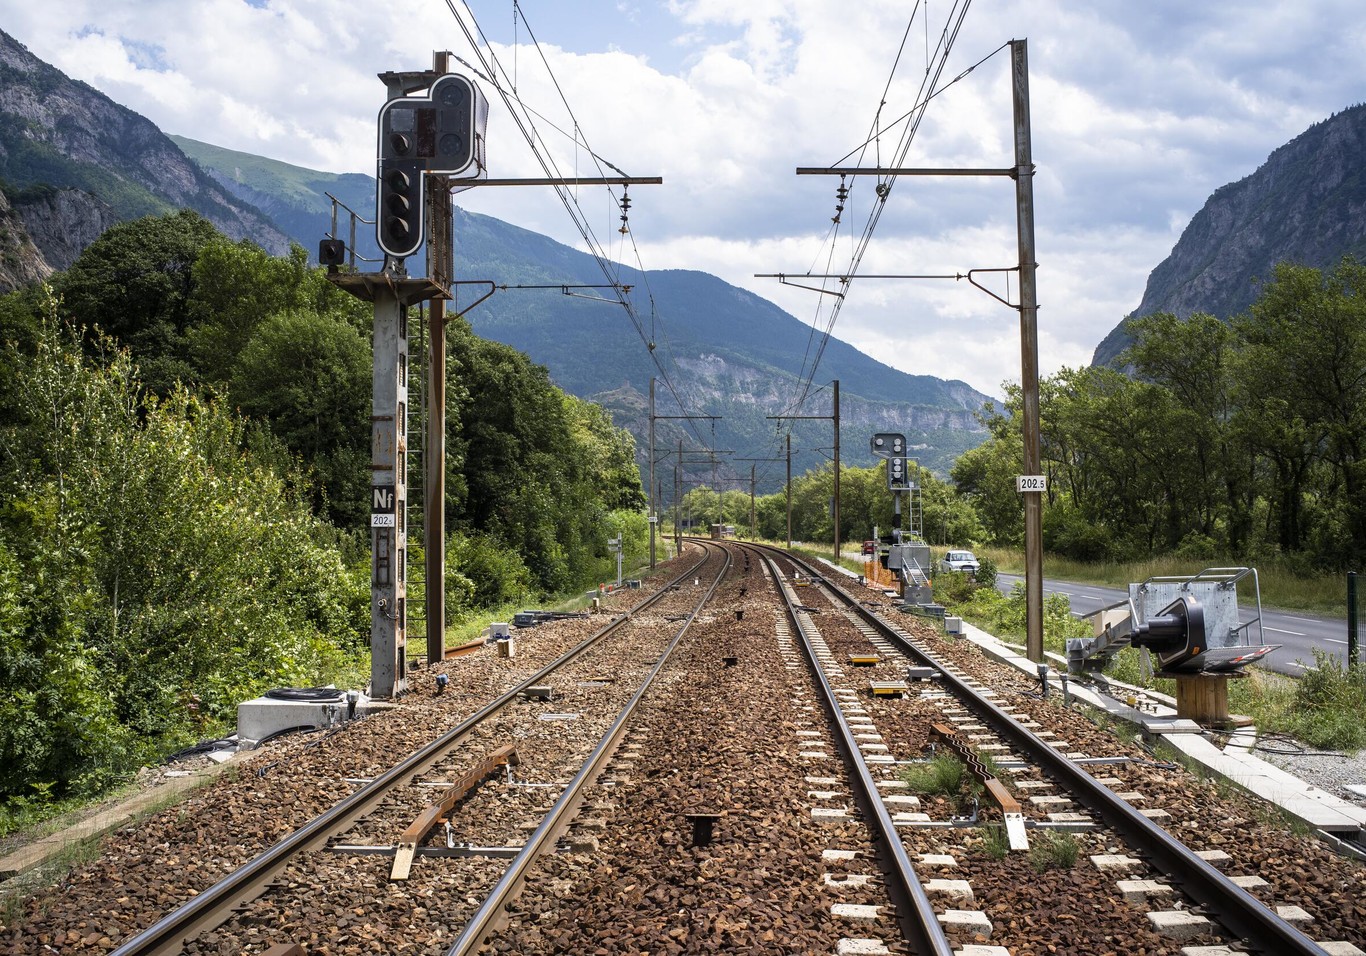 Signalling work on Lyon / Turin line